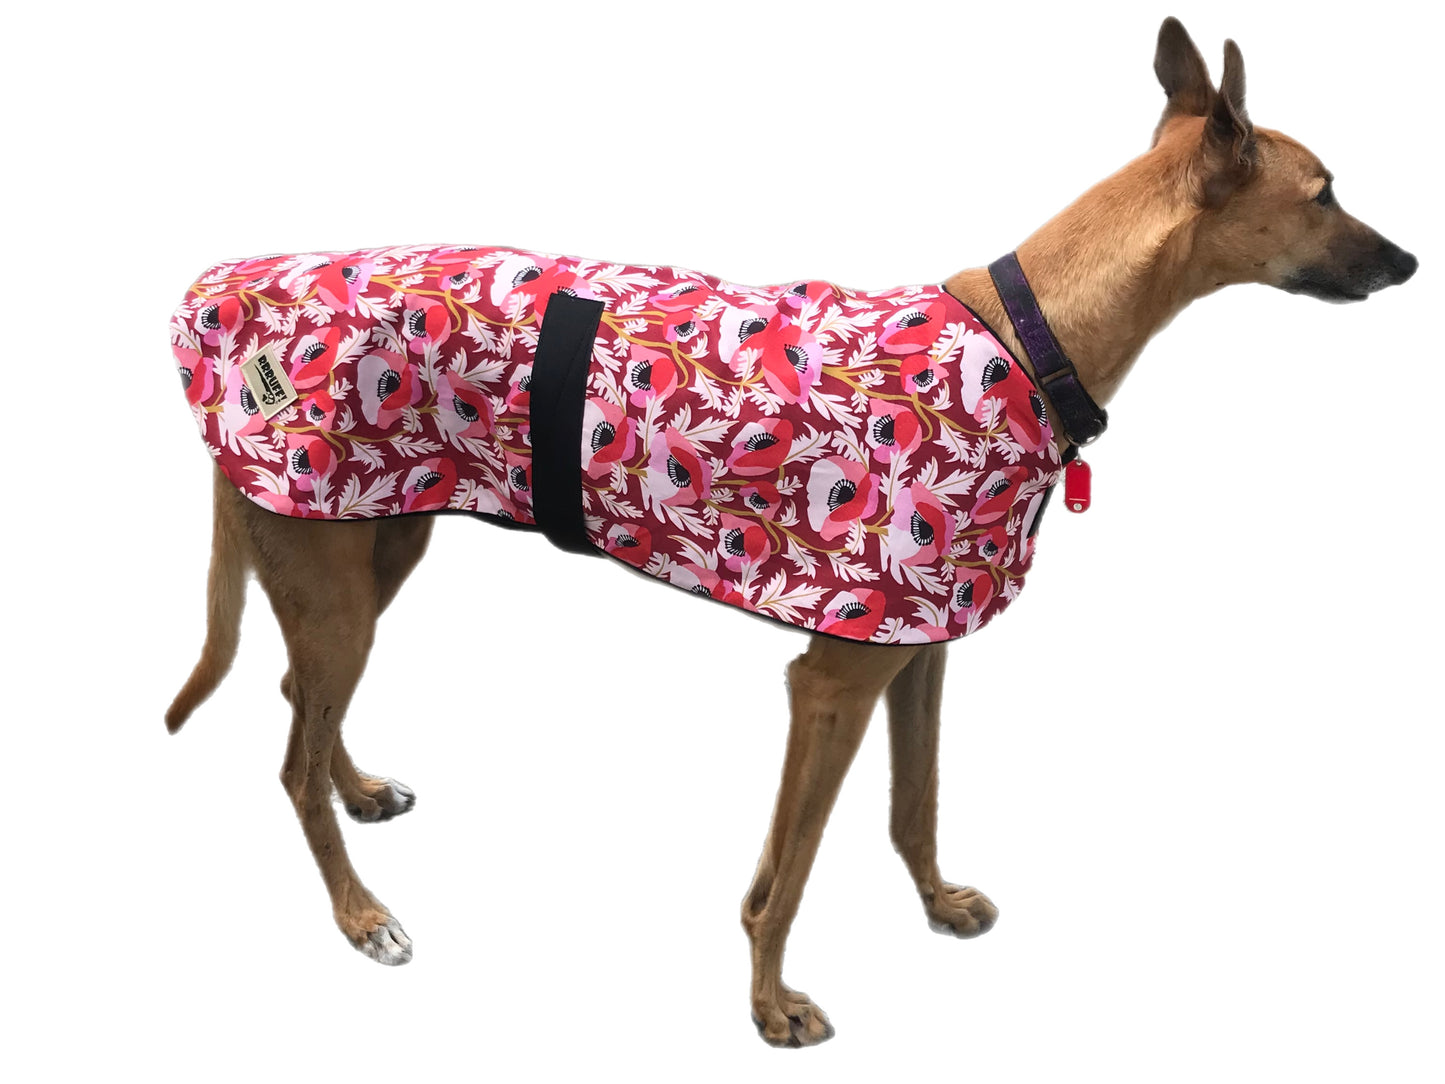 Summer range classic style Greyhound ‘red poppy‘design in cotton & thin fleece washable